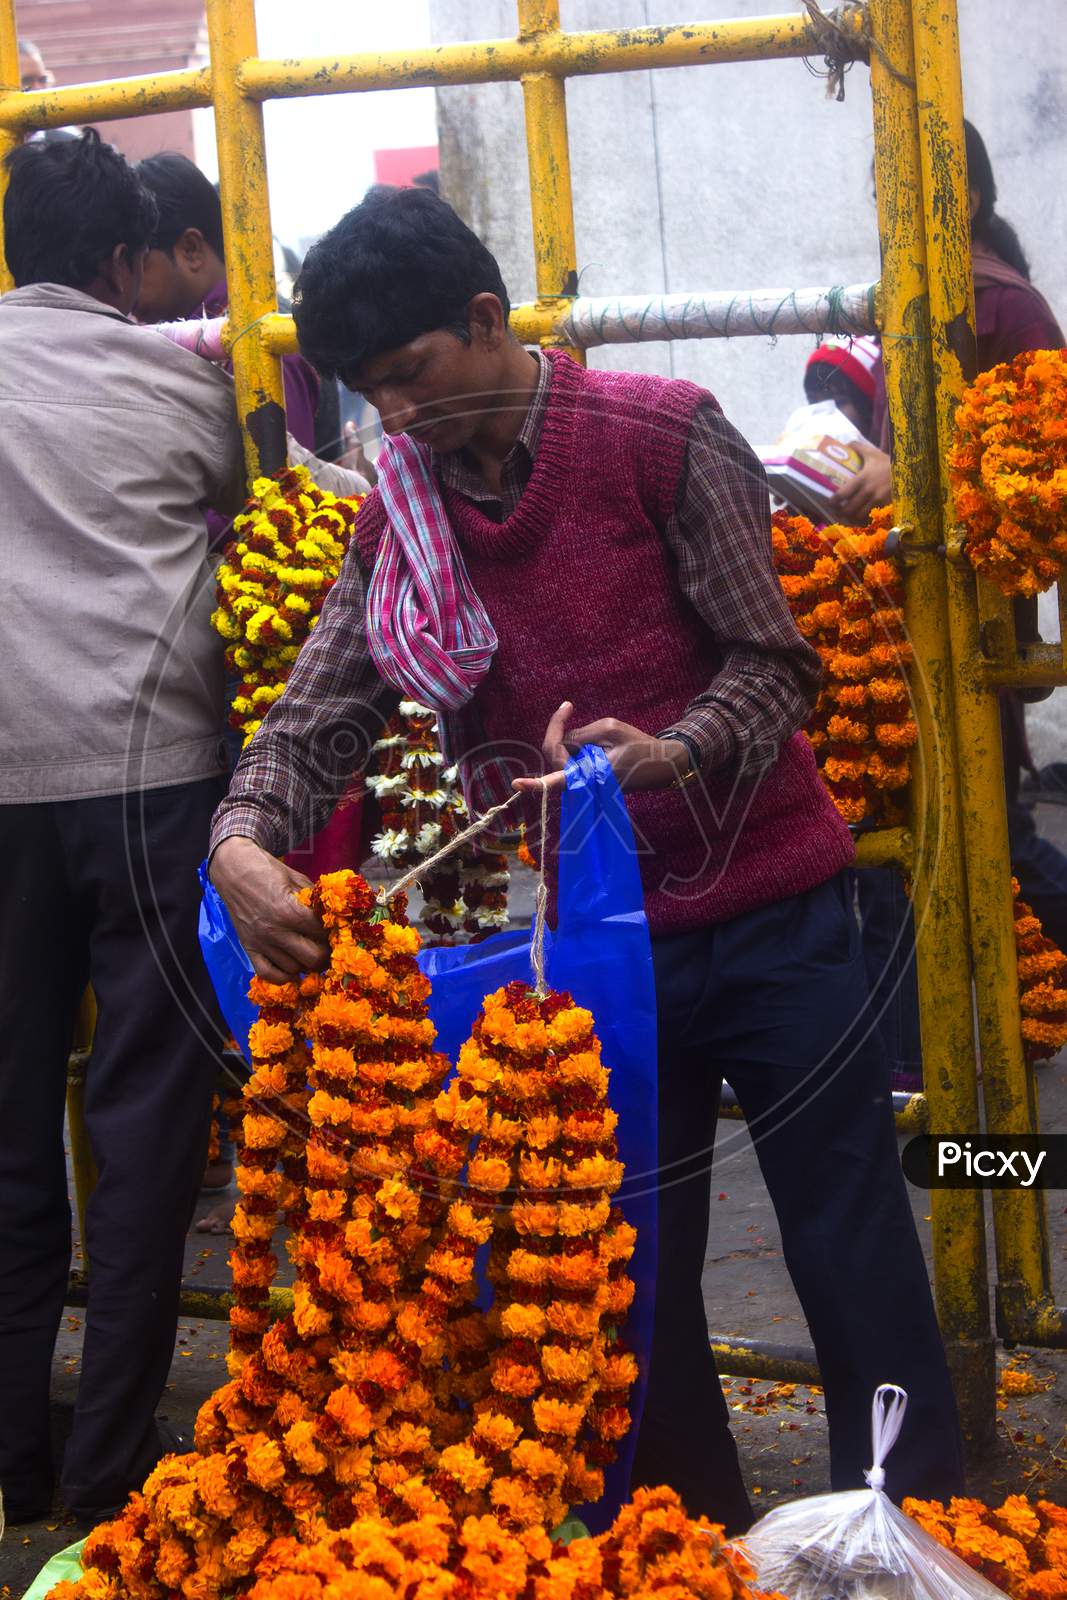 A Flower vendor in a Market